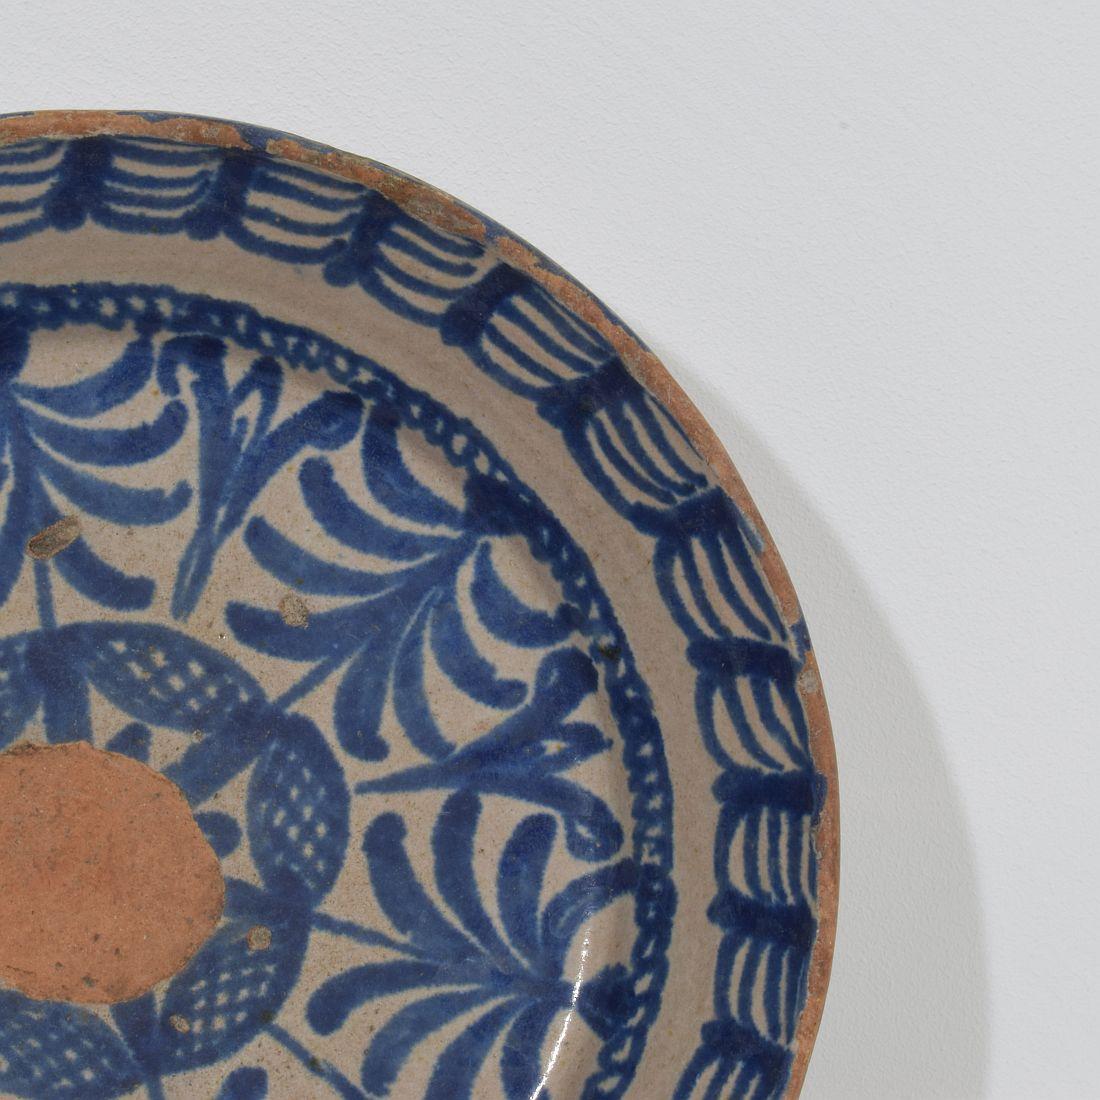 18th Century Spanish Glazed Terracotta Bowl For Sale 3